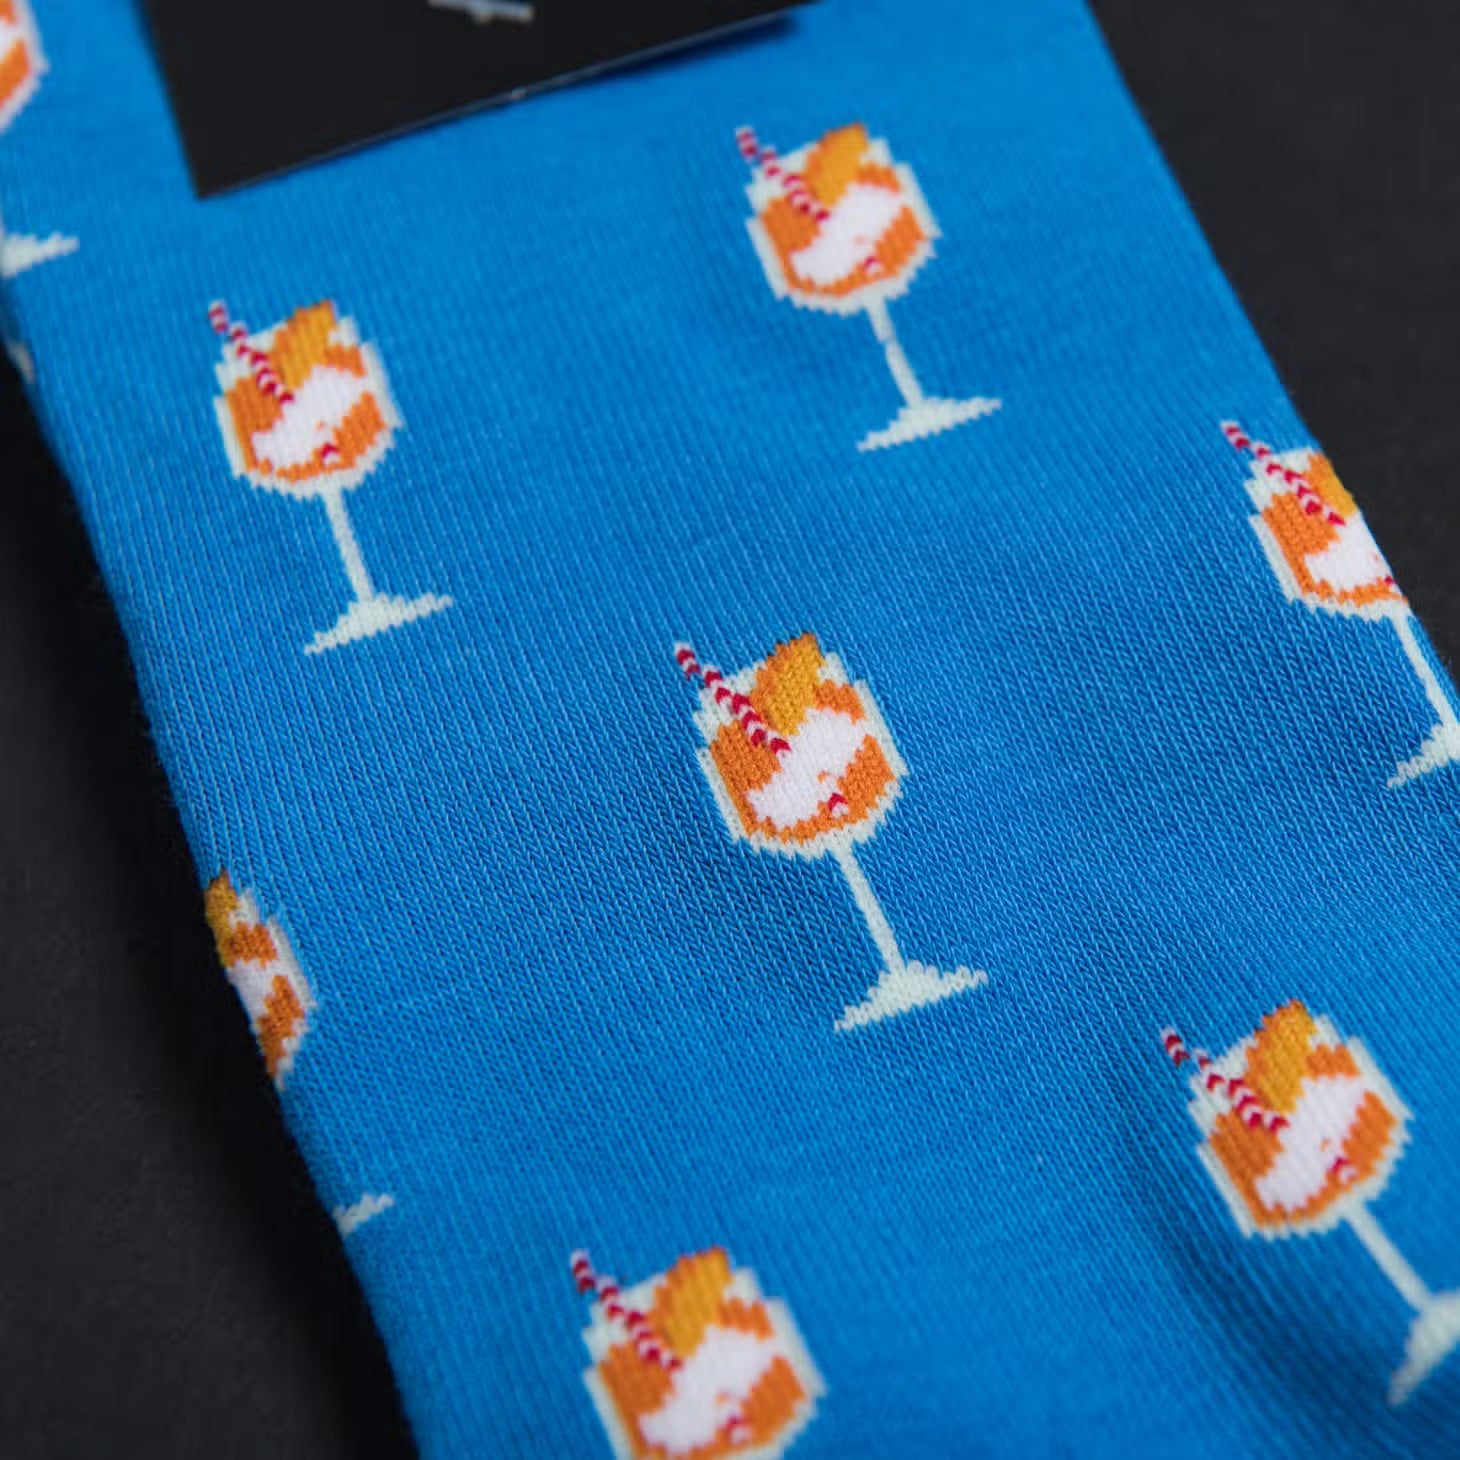 Aperol Spritz patterned socks on blue socks